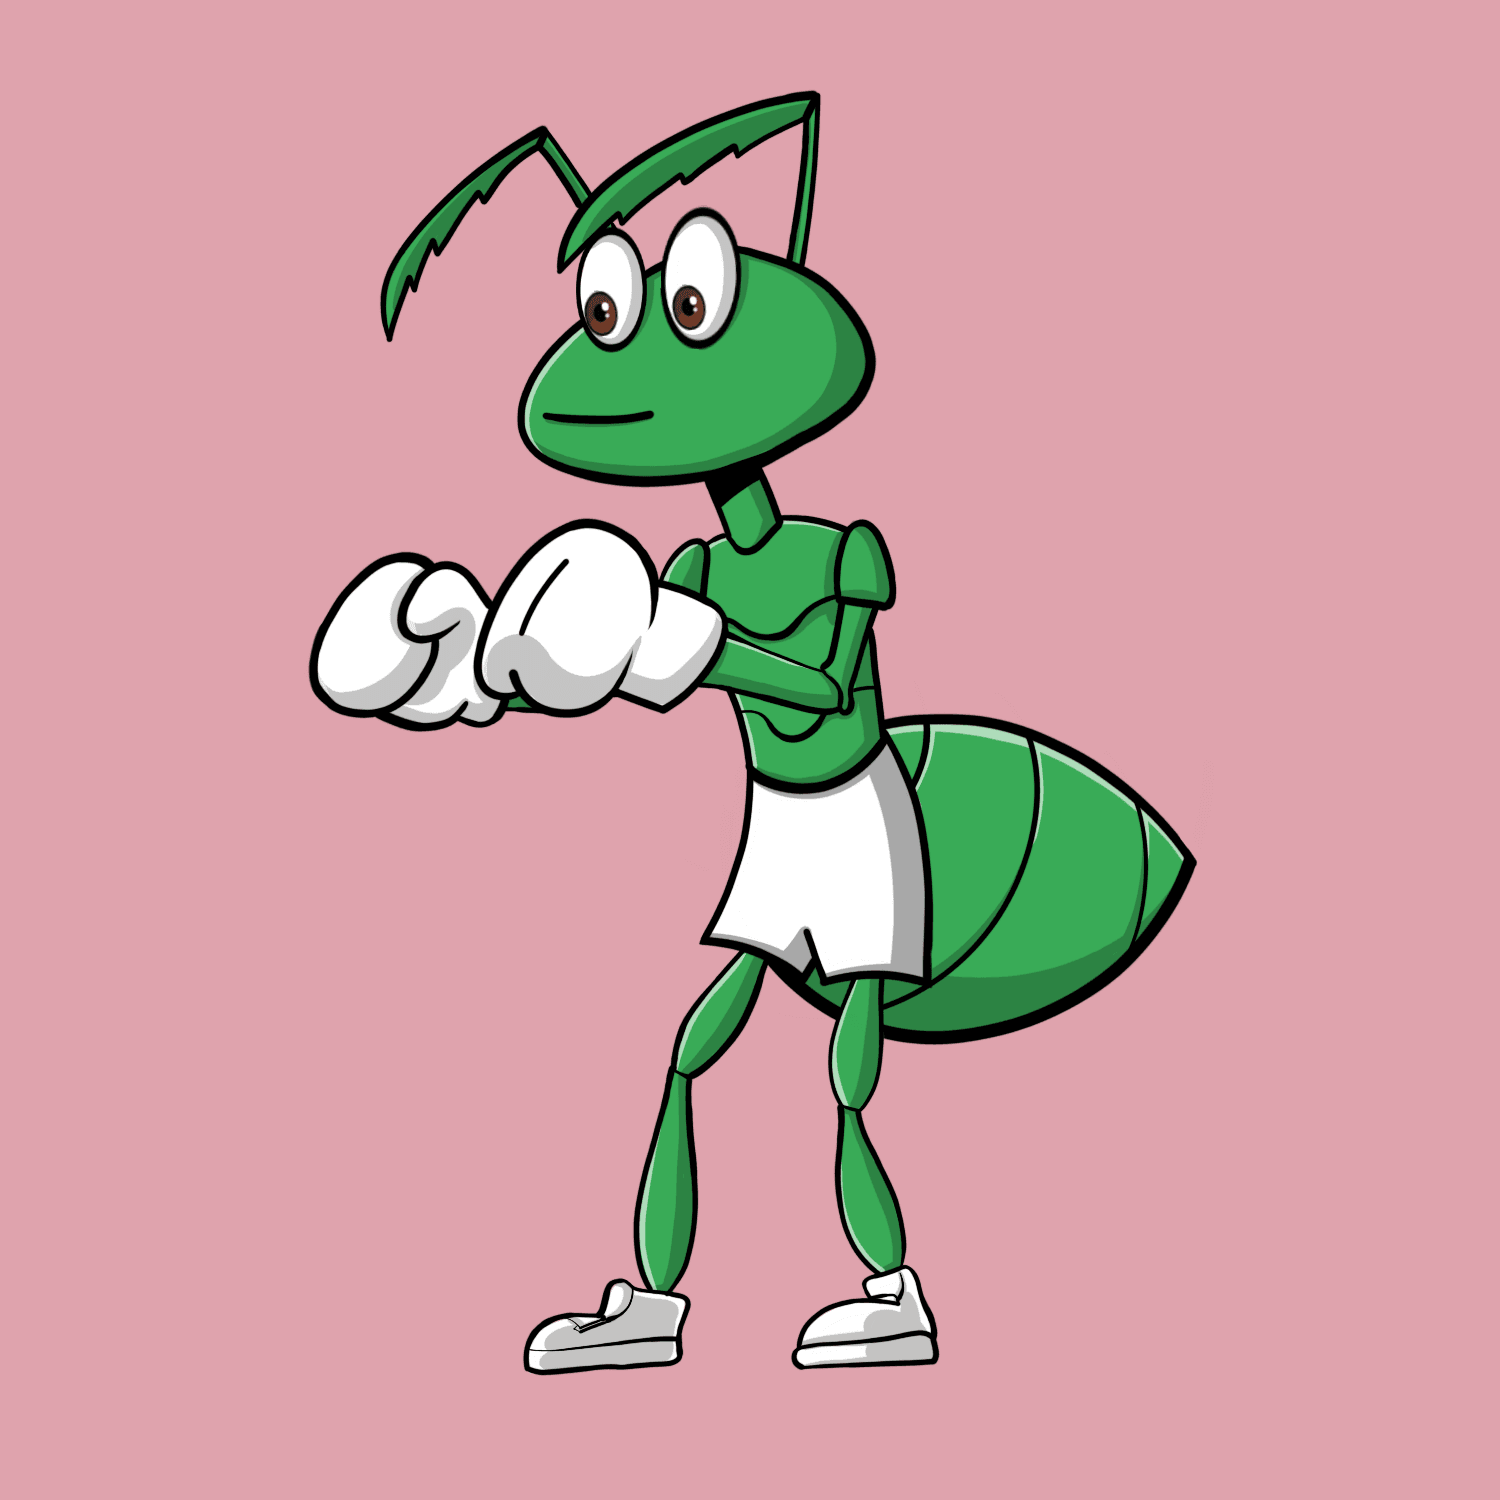 Arthur The Boxing Crypto Ant